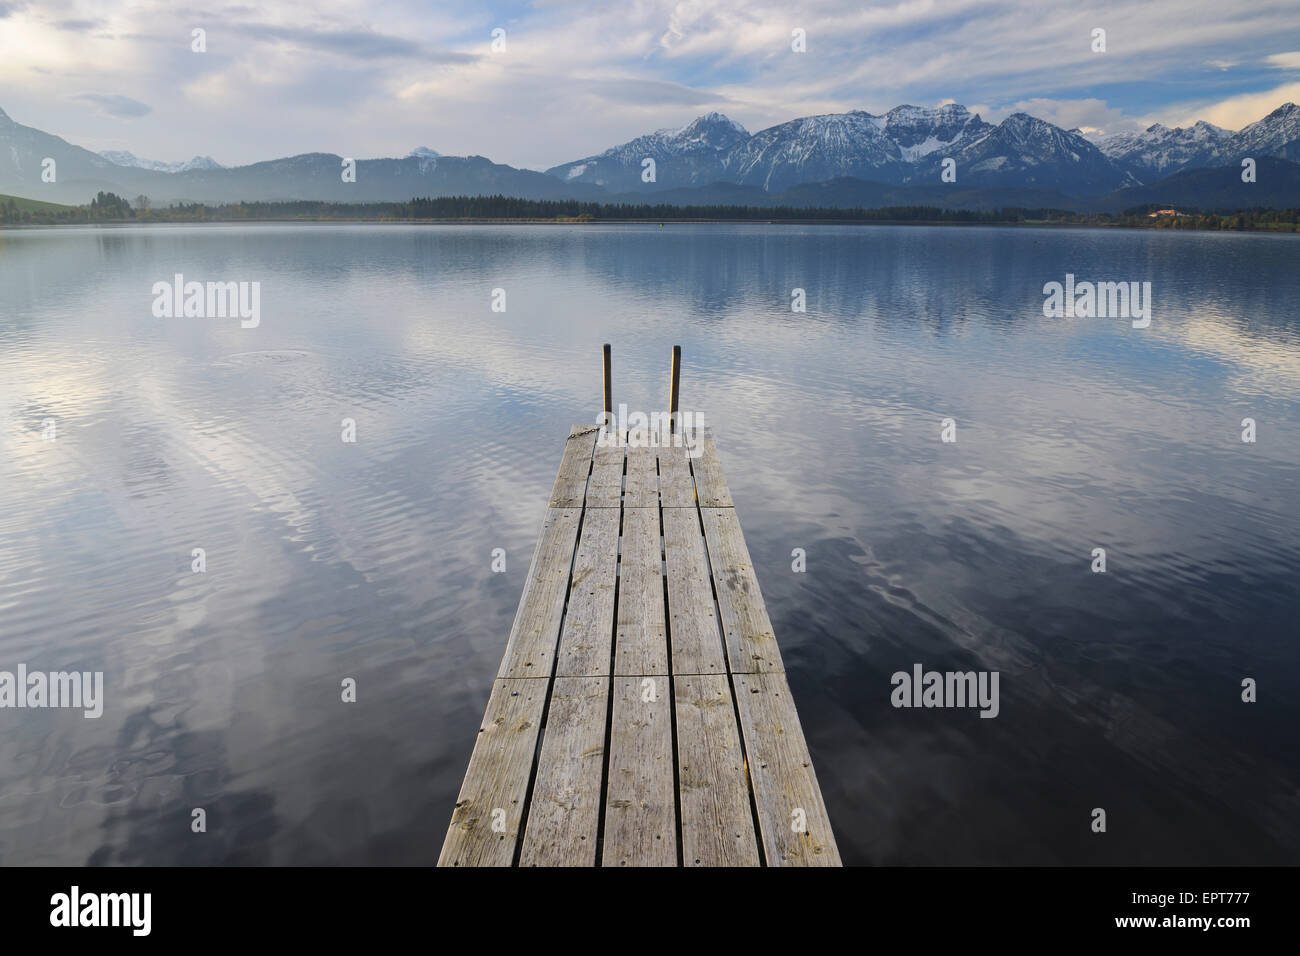 Pontile in legno, Hopfen am See, Lago Hopfensee, Baviera, Germania Foto Stock